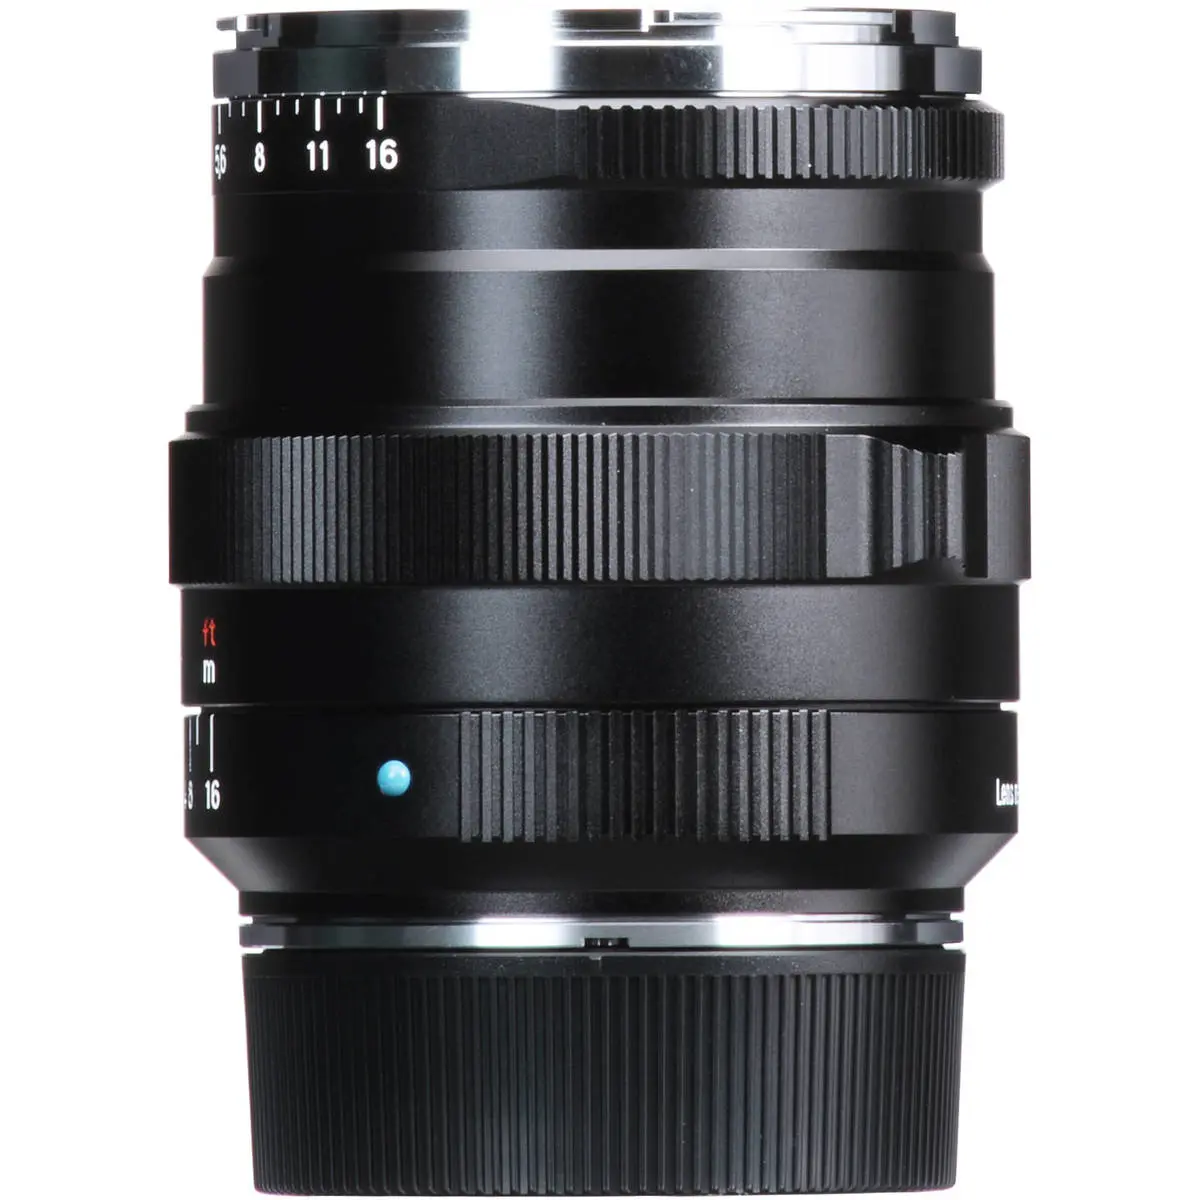 9. Carl Zeiss Distagon T* 35mm f/1.4 ZM Lens (Black) Lens